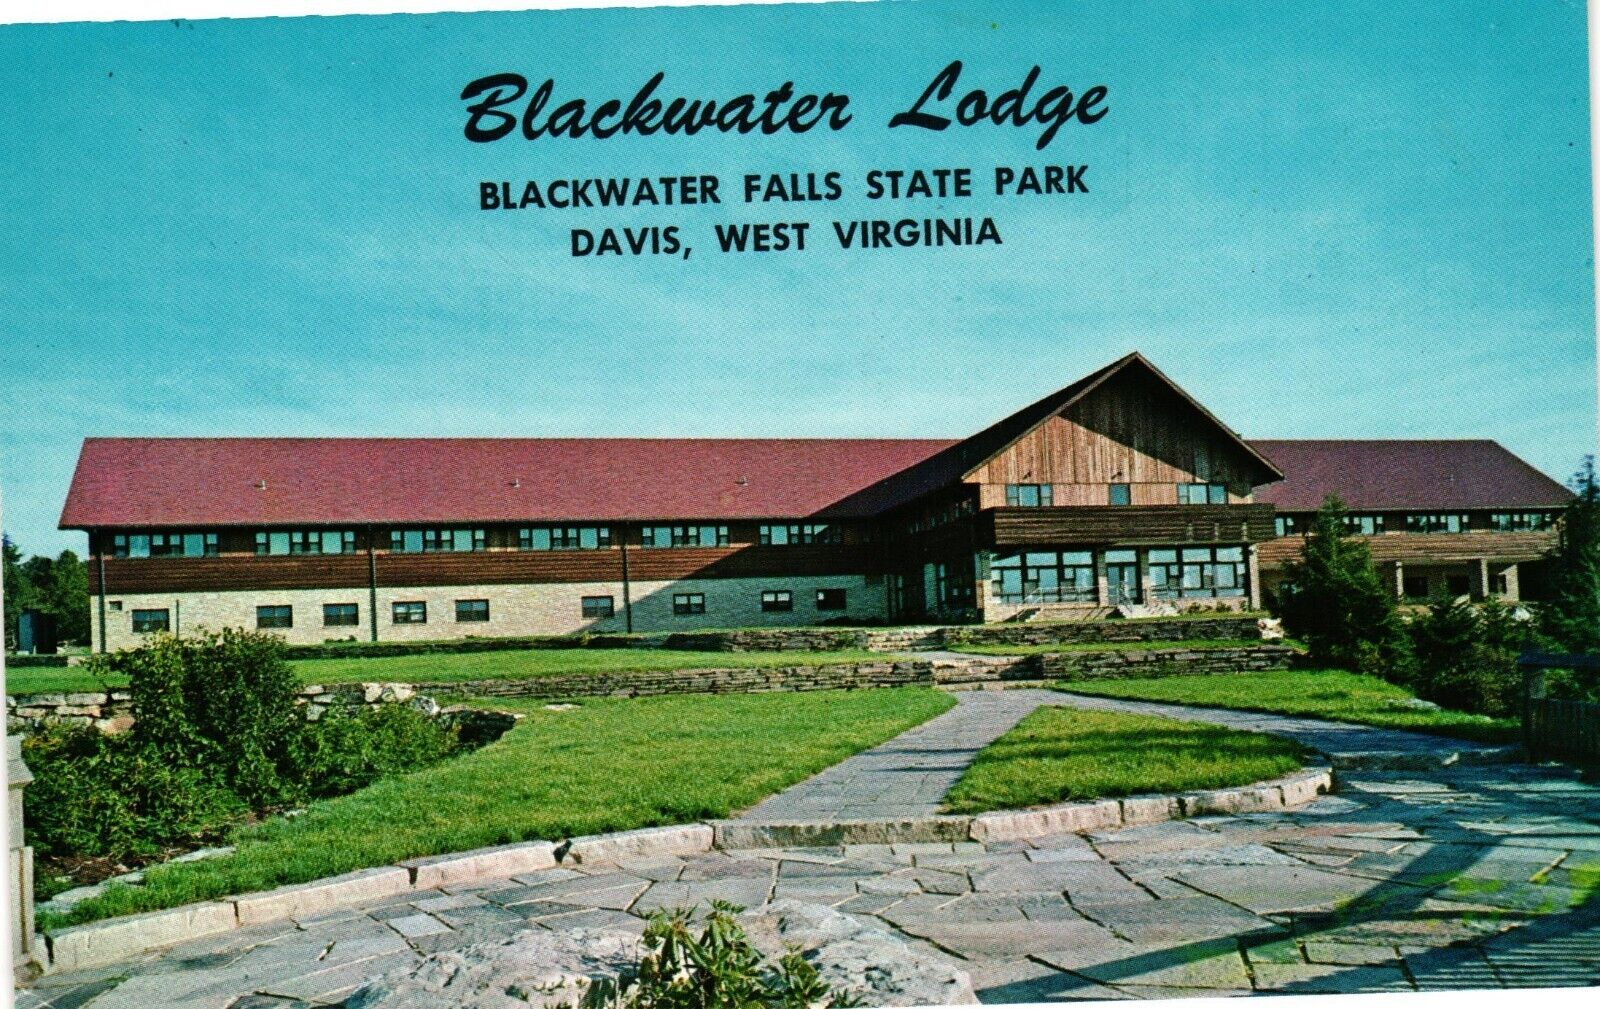 Vintage Postcard - Blackwater Lodge In State Park Davis West Virgina Un-Posted